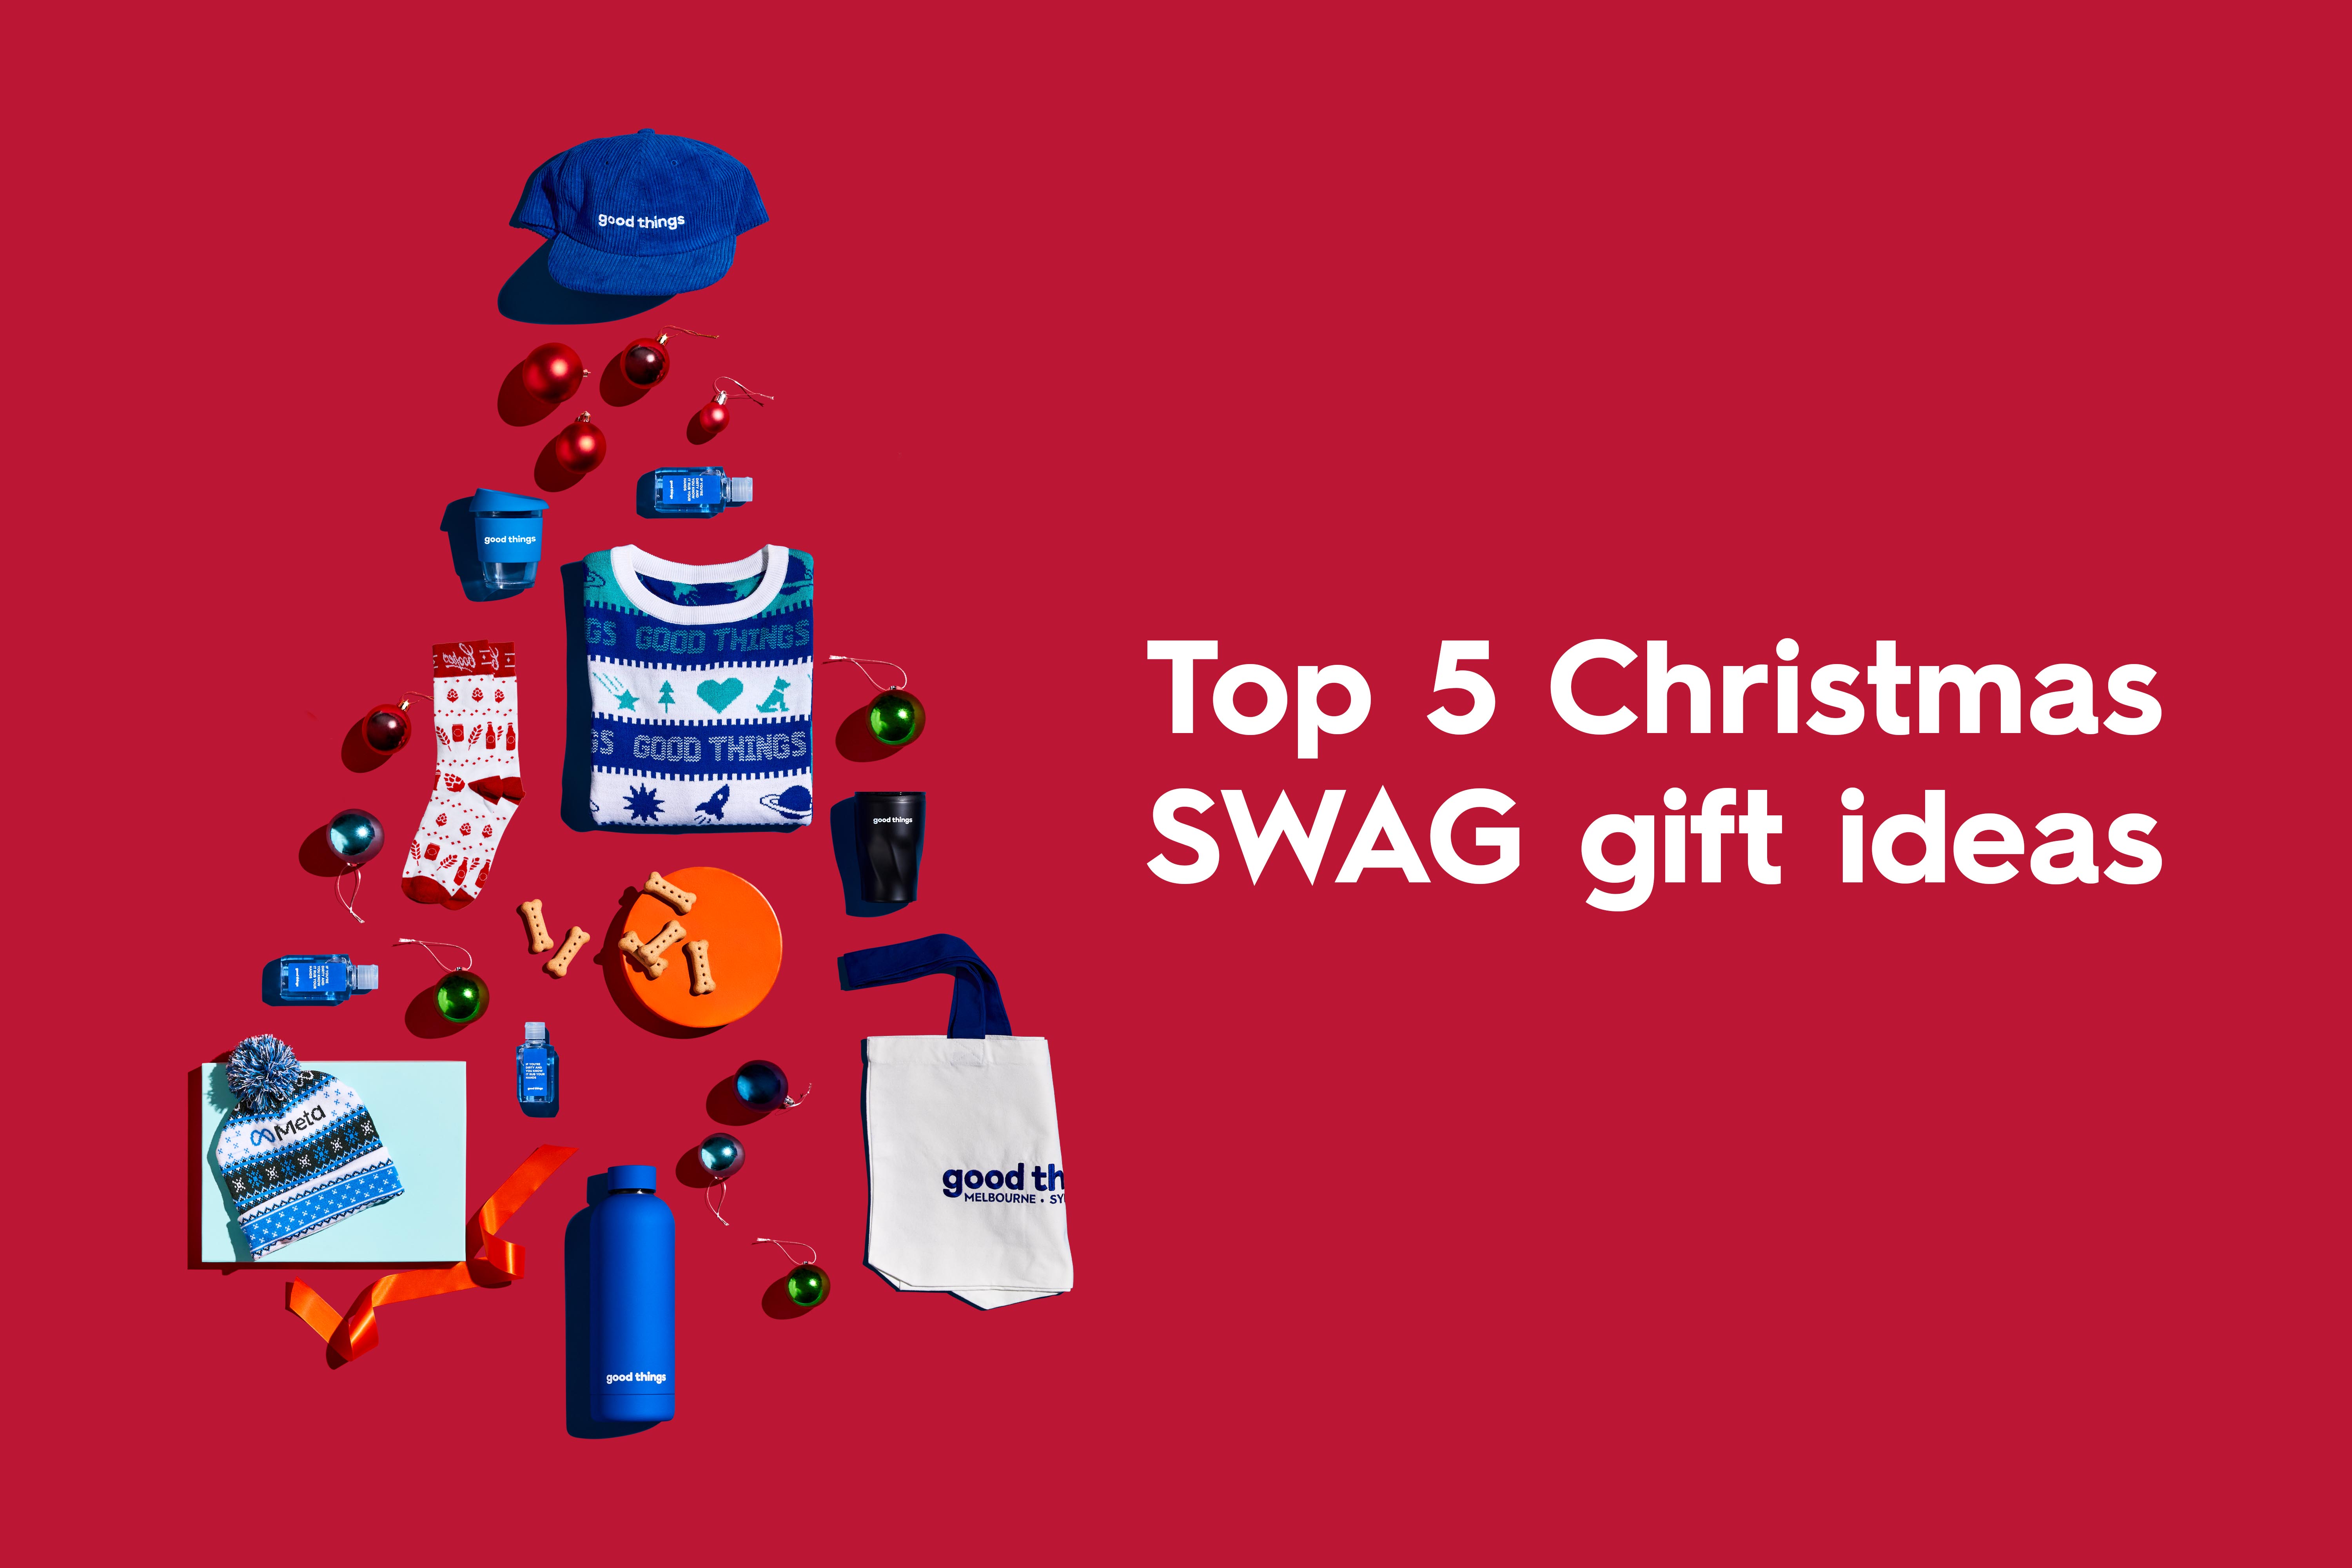 Top 5 Christmas SWAG gift ideas